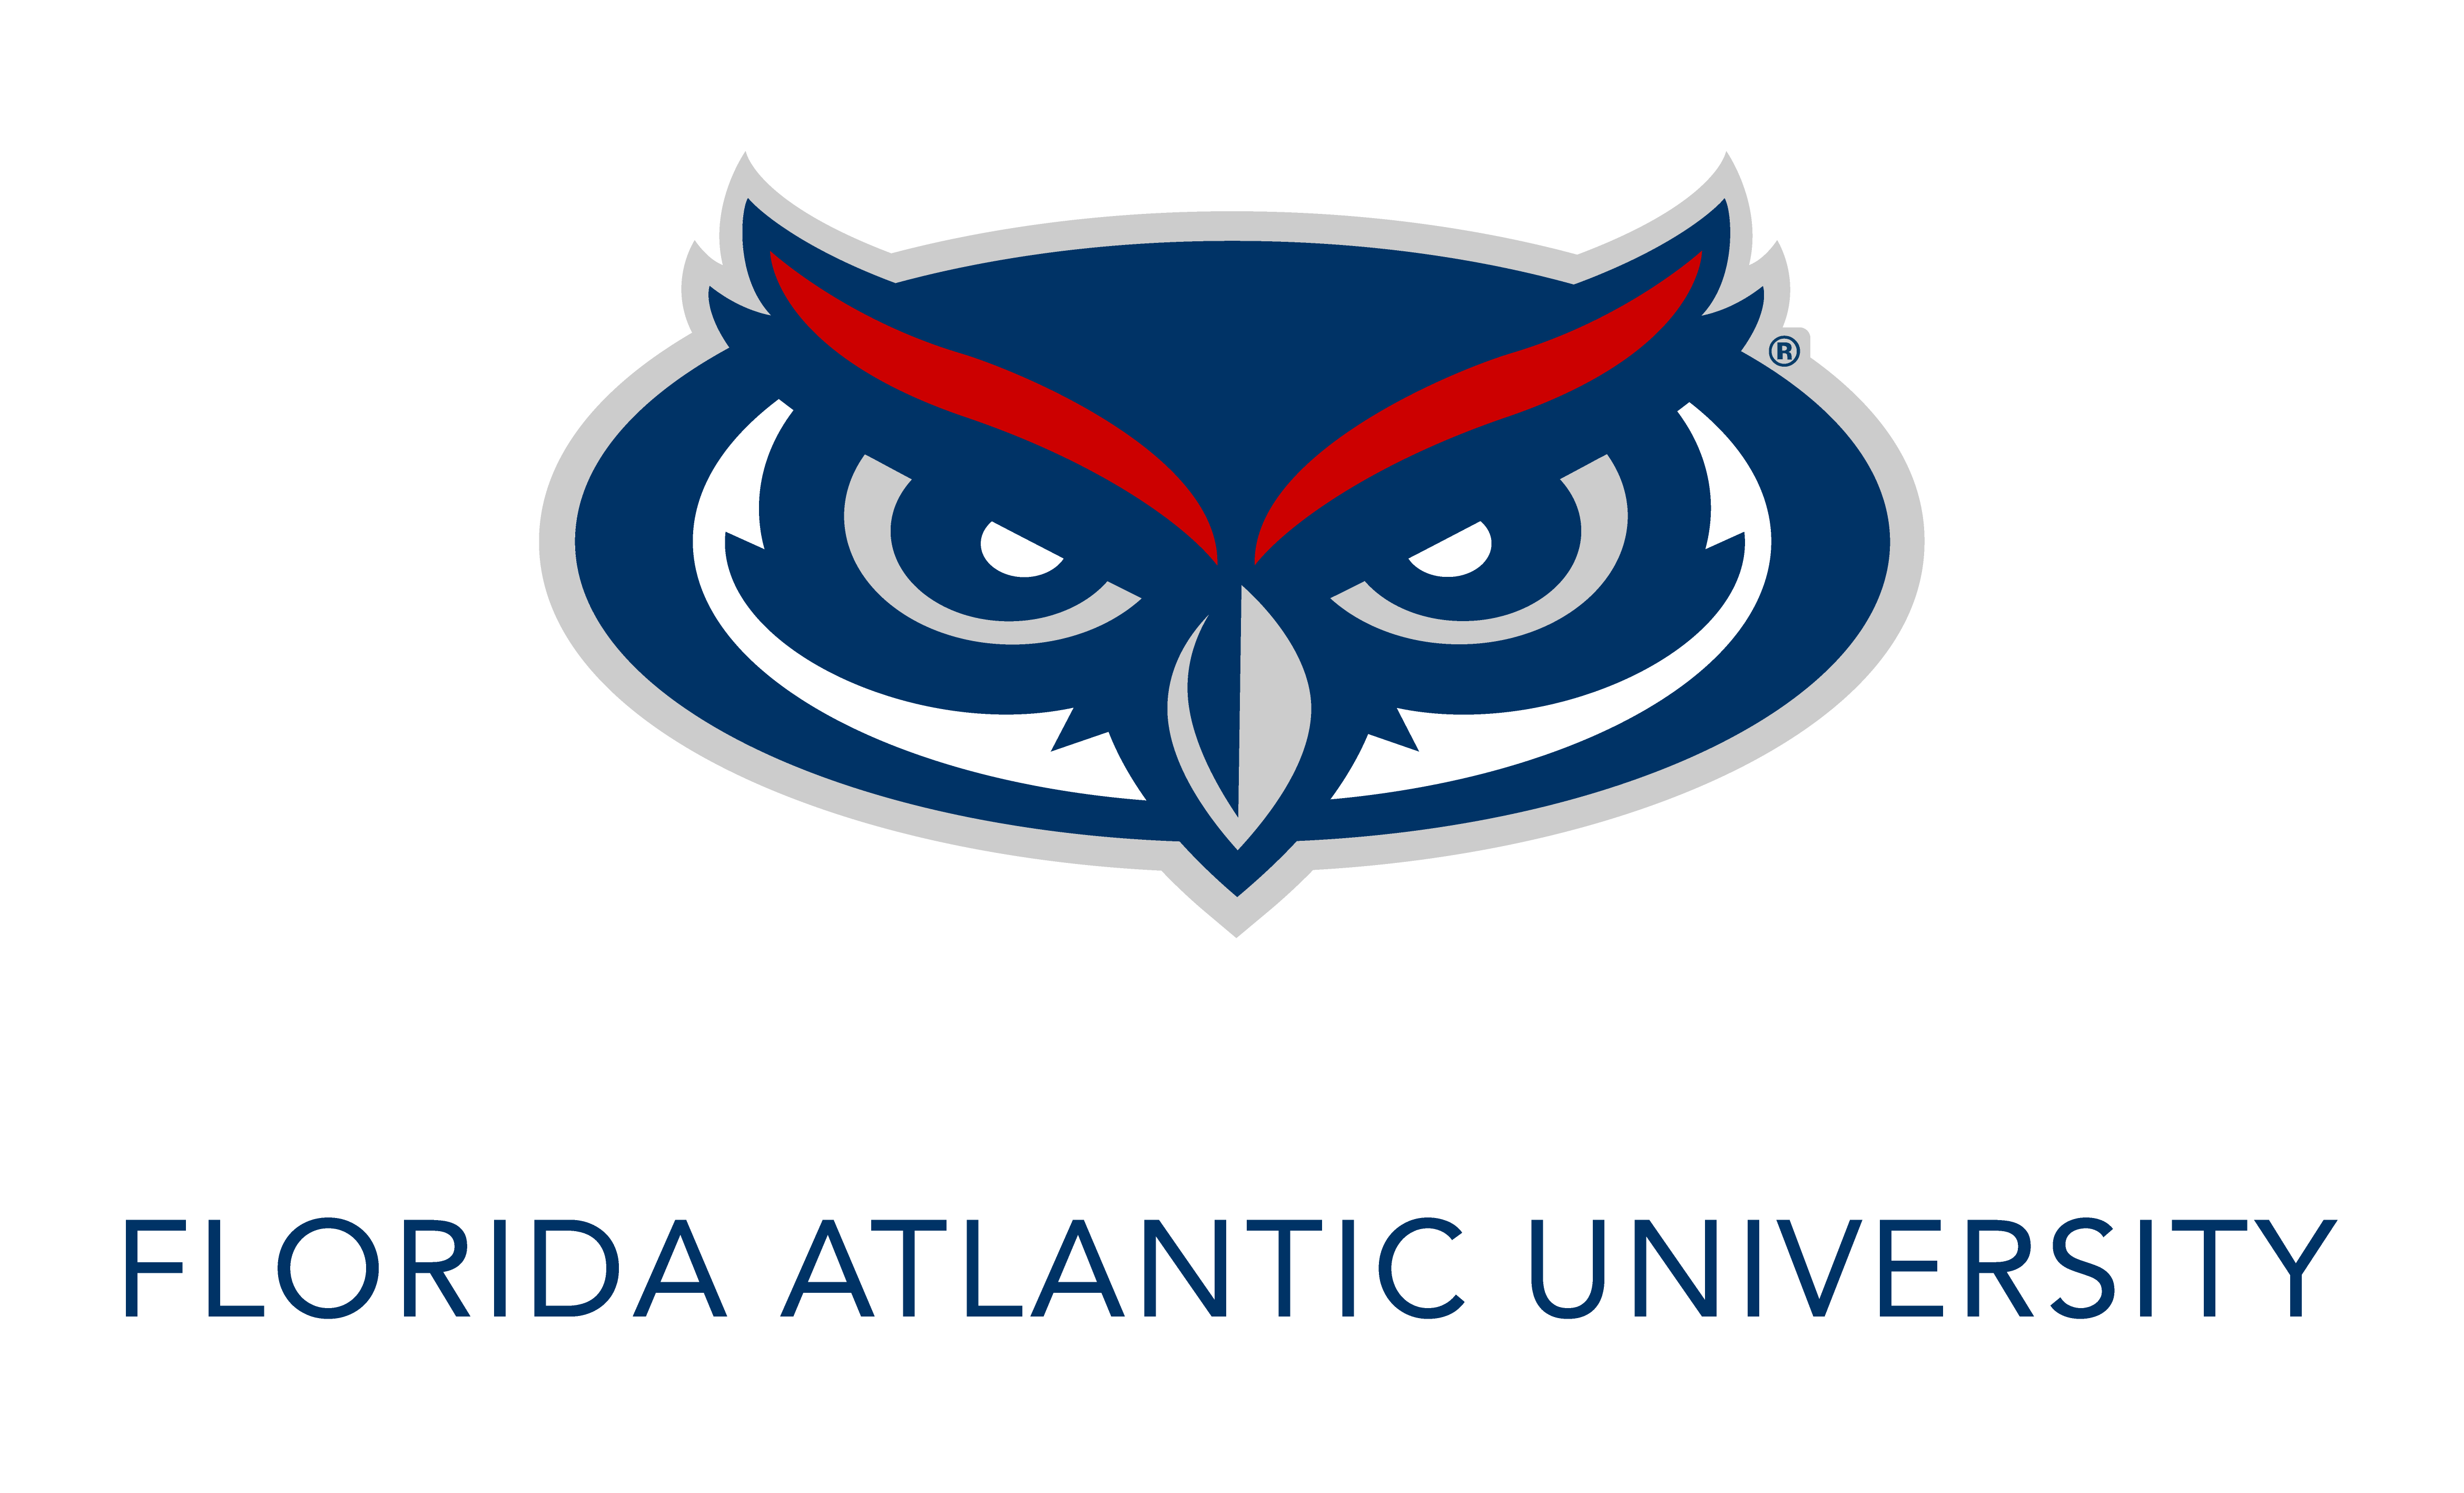 Florida Atlantic logo